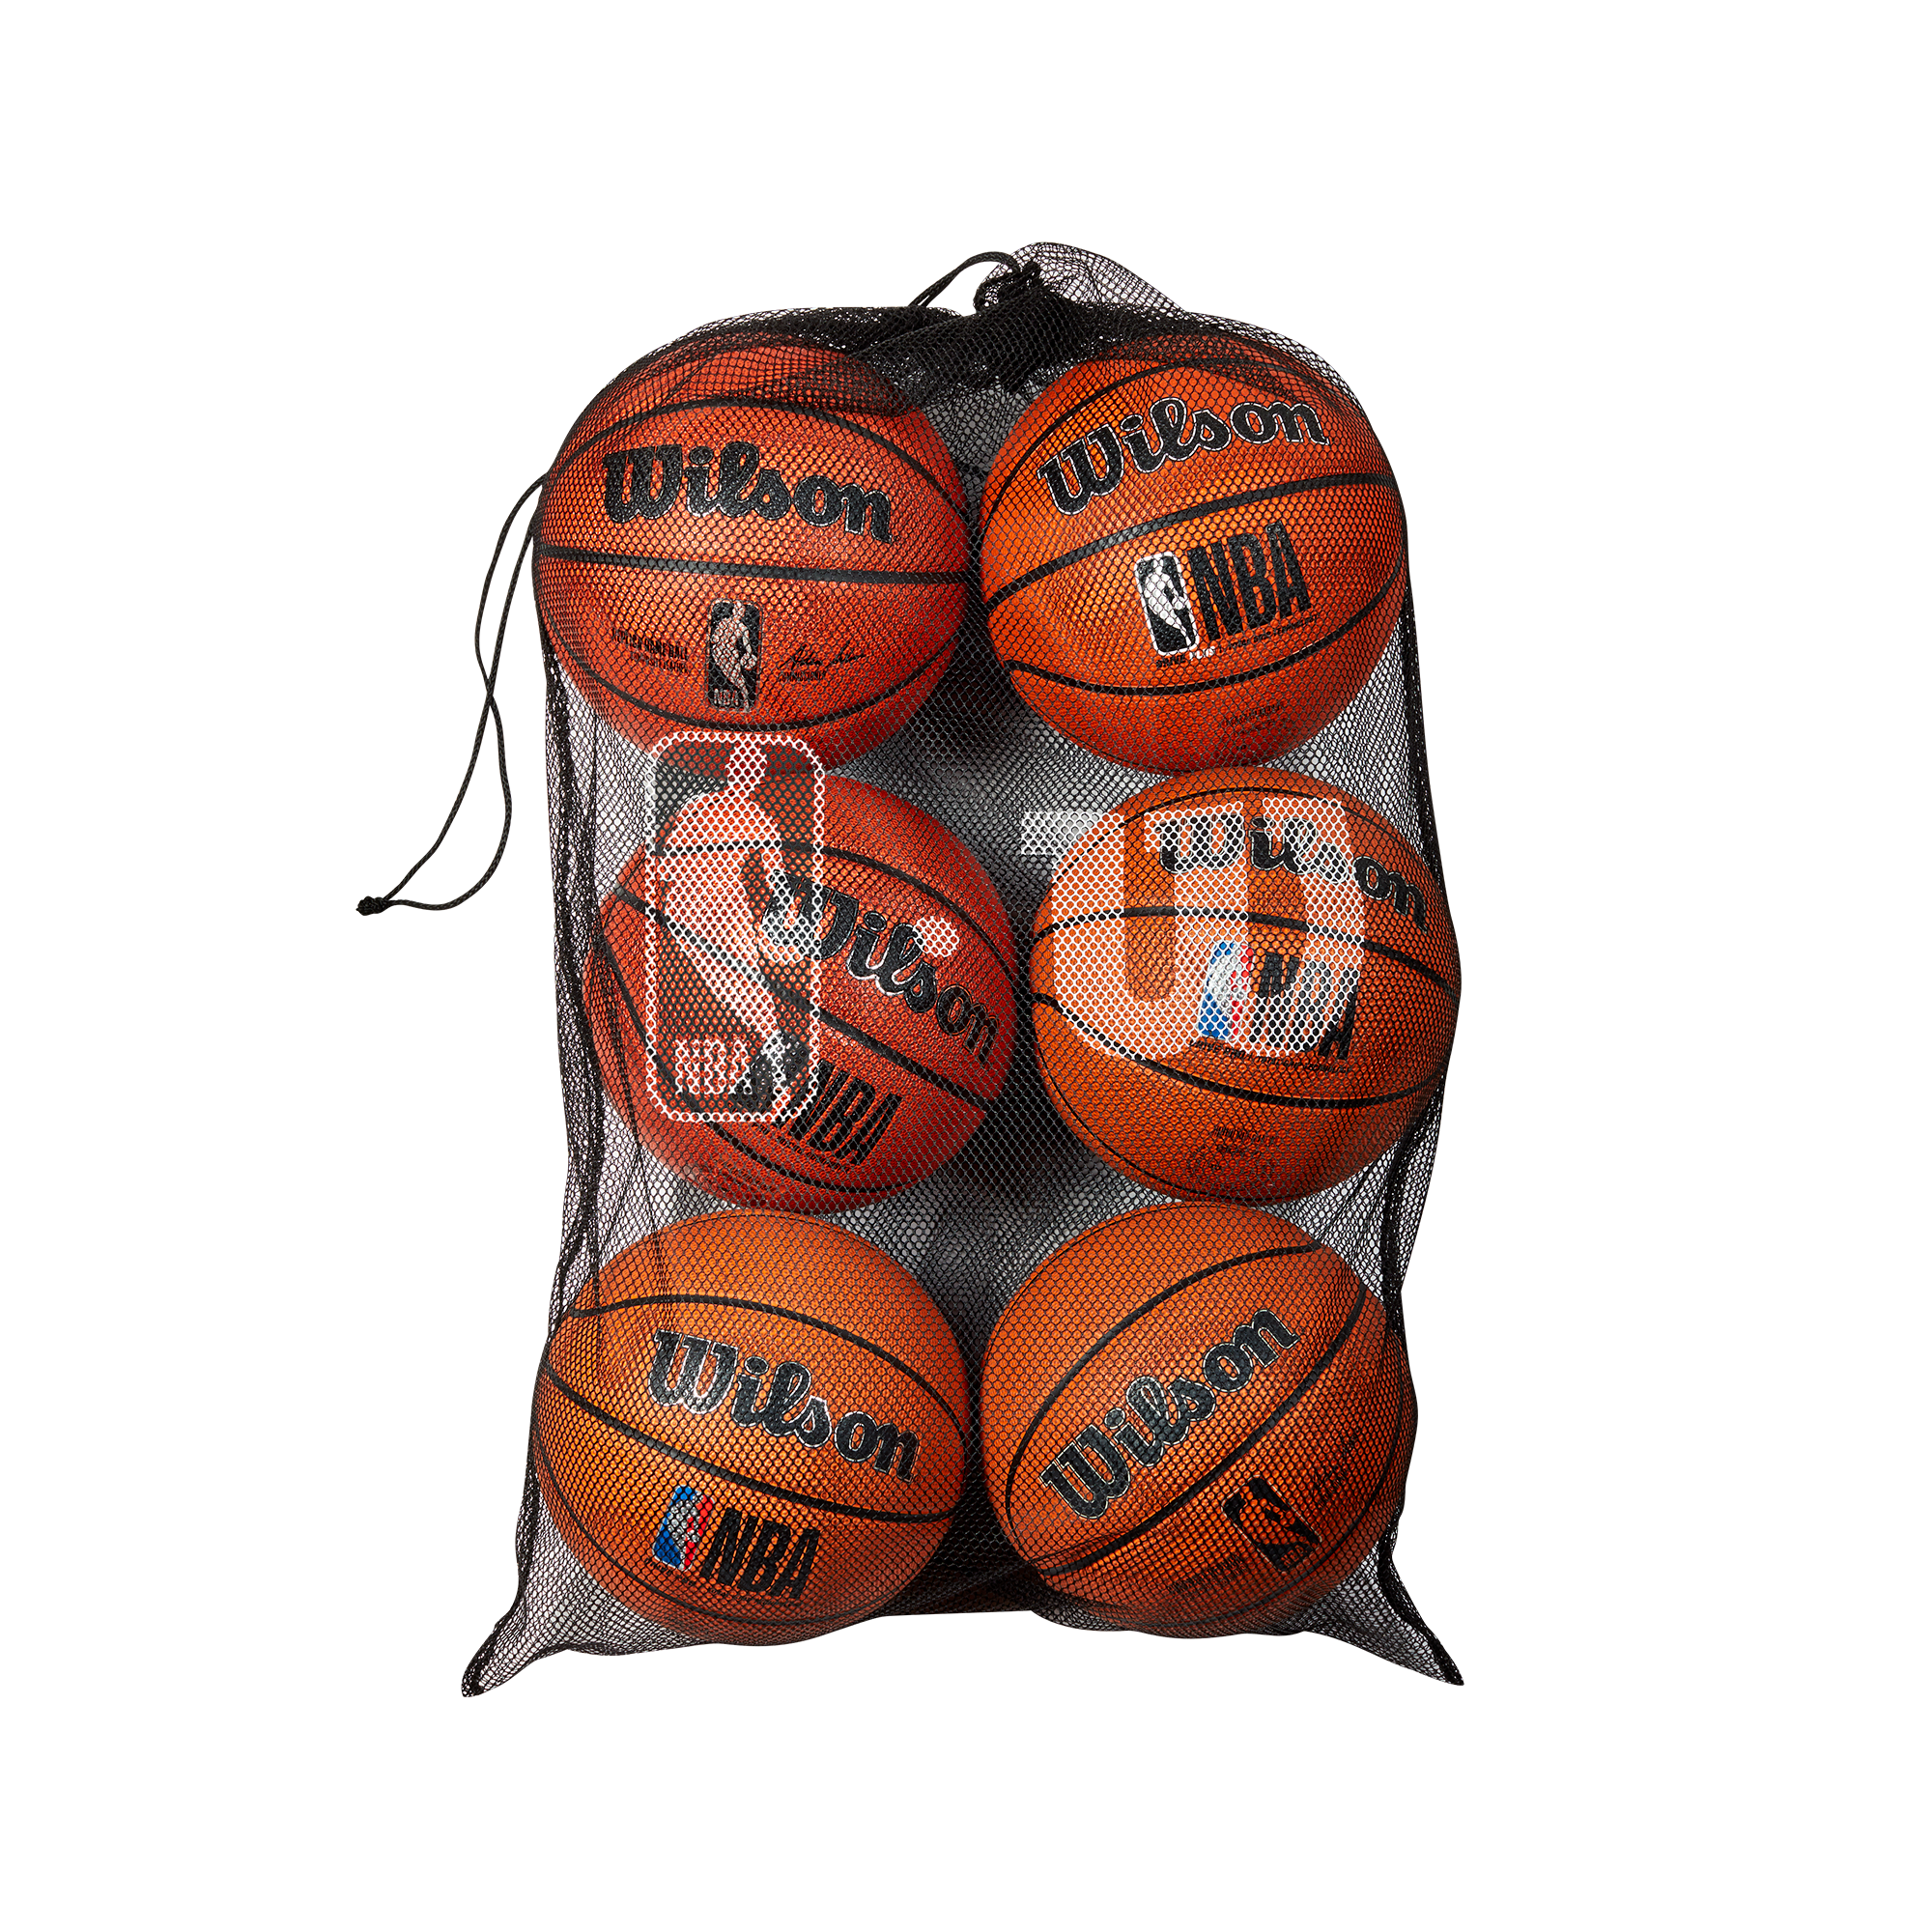 Pro Elite 2.0 Basketball Sleeves